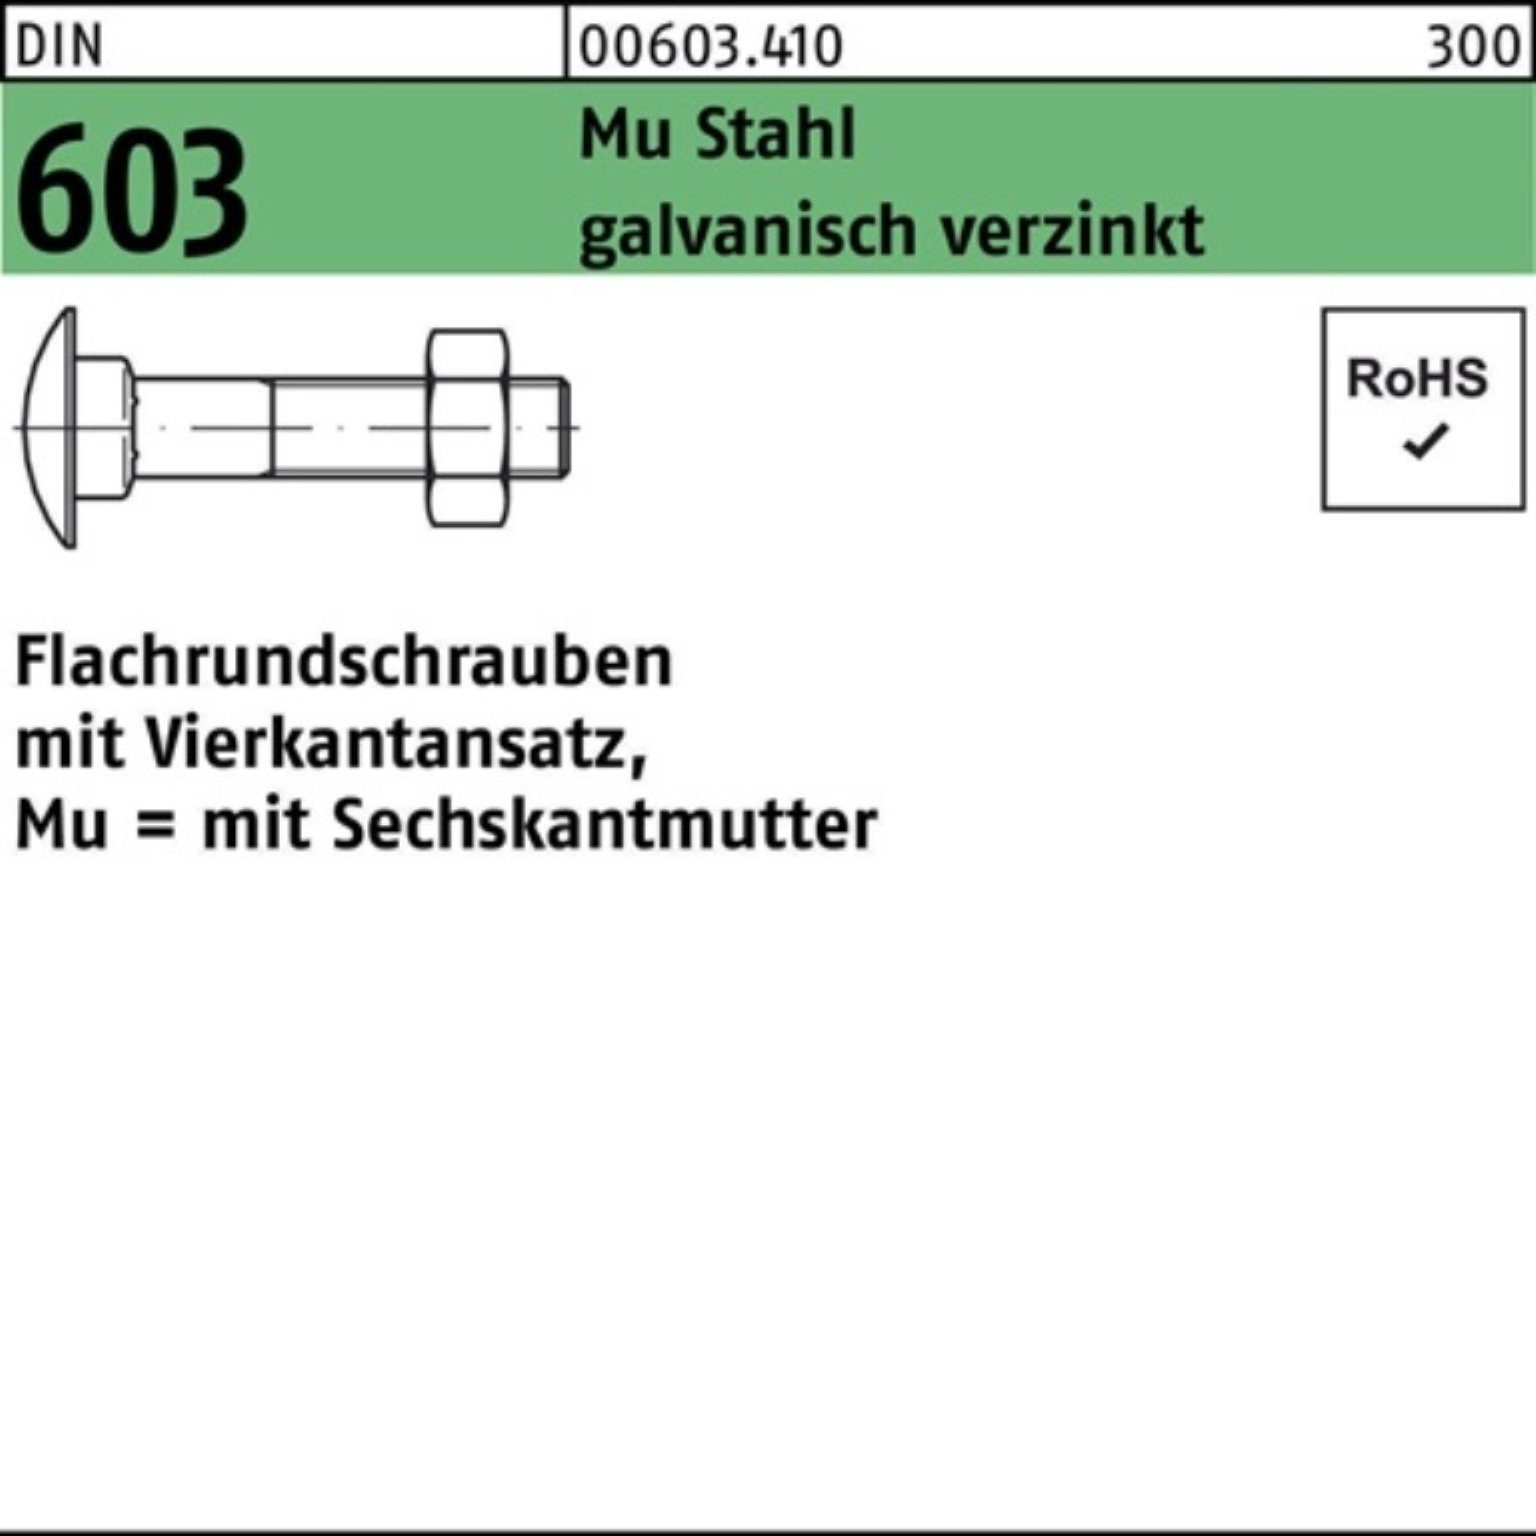 Flachrundschraube Vierkantansatz/6-ktmutter 603 Pack M12x40 Reyher 100er DIN Schraube